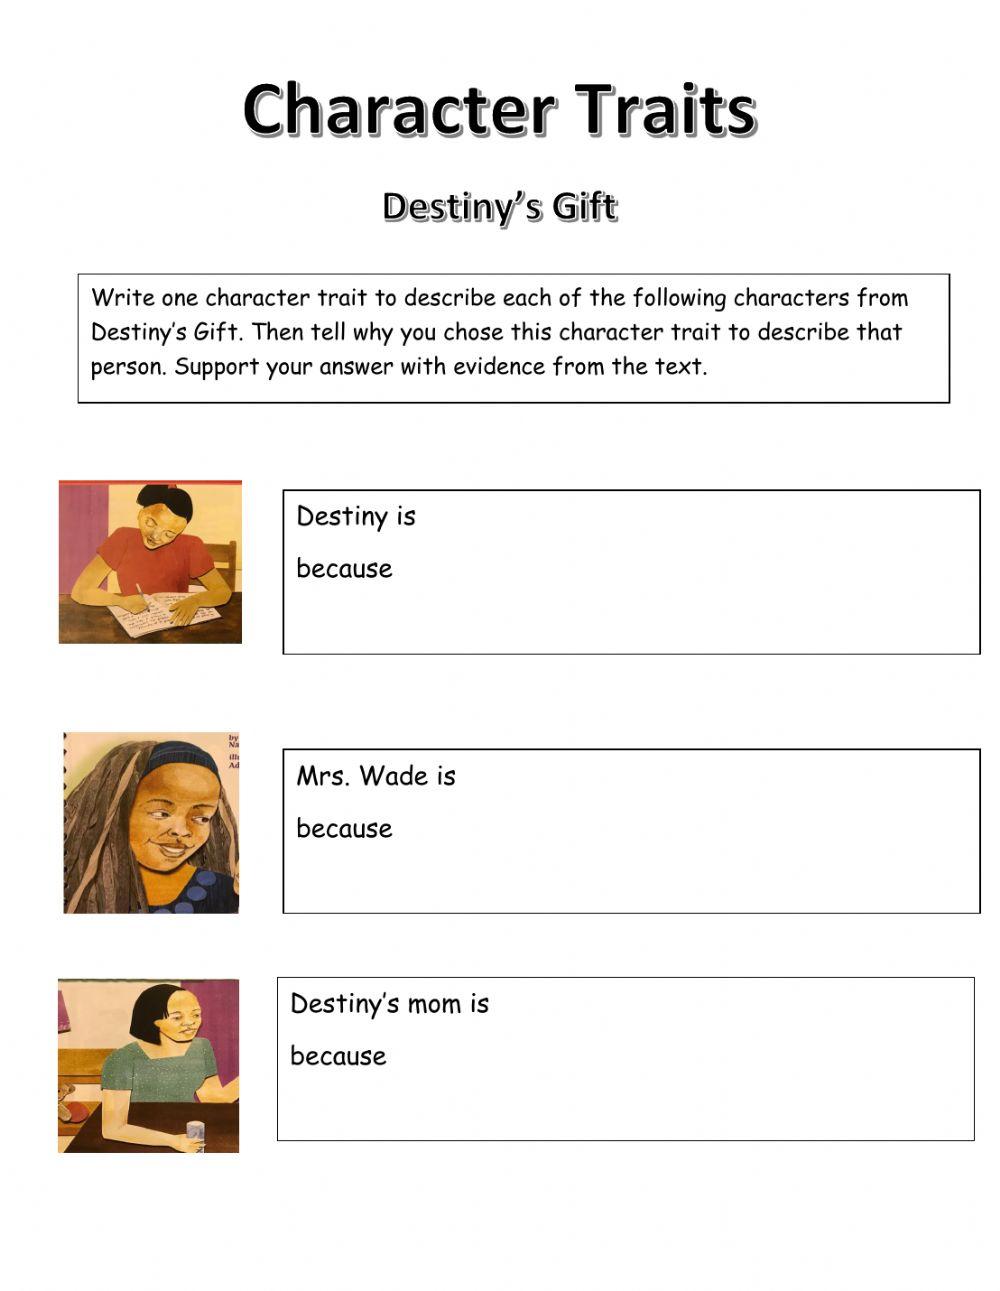 Destiny's Gift Character Traits Analysis